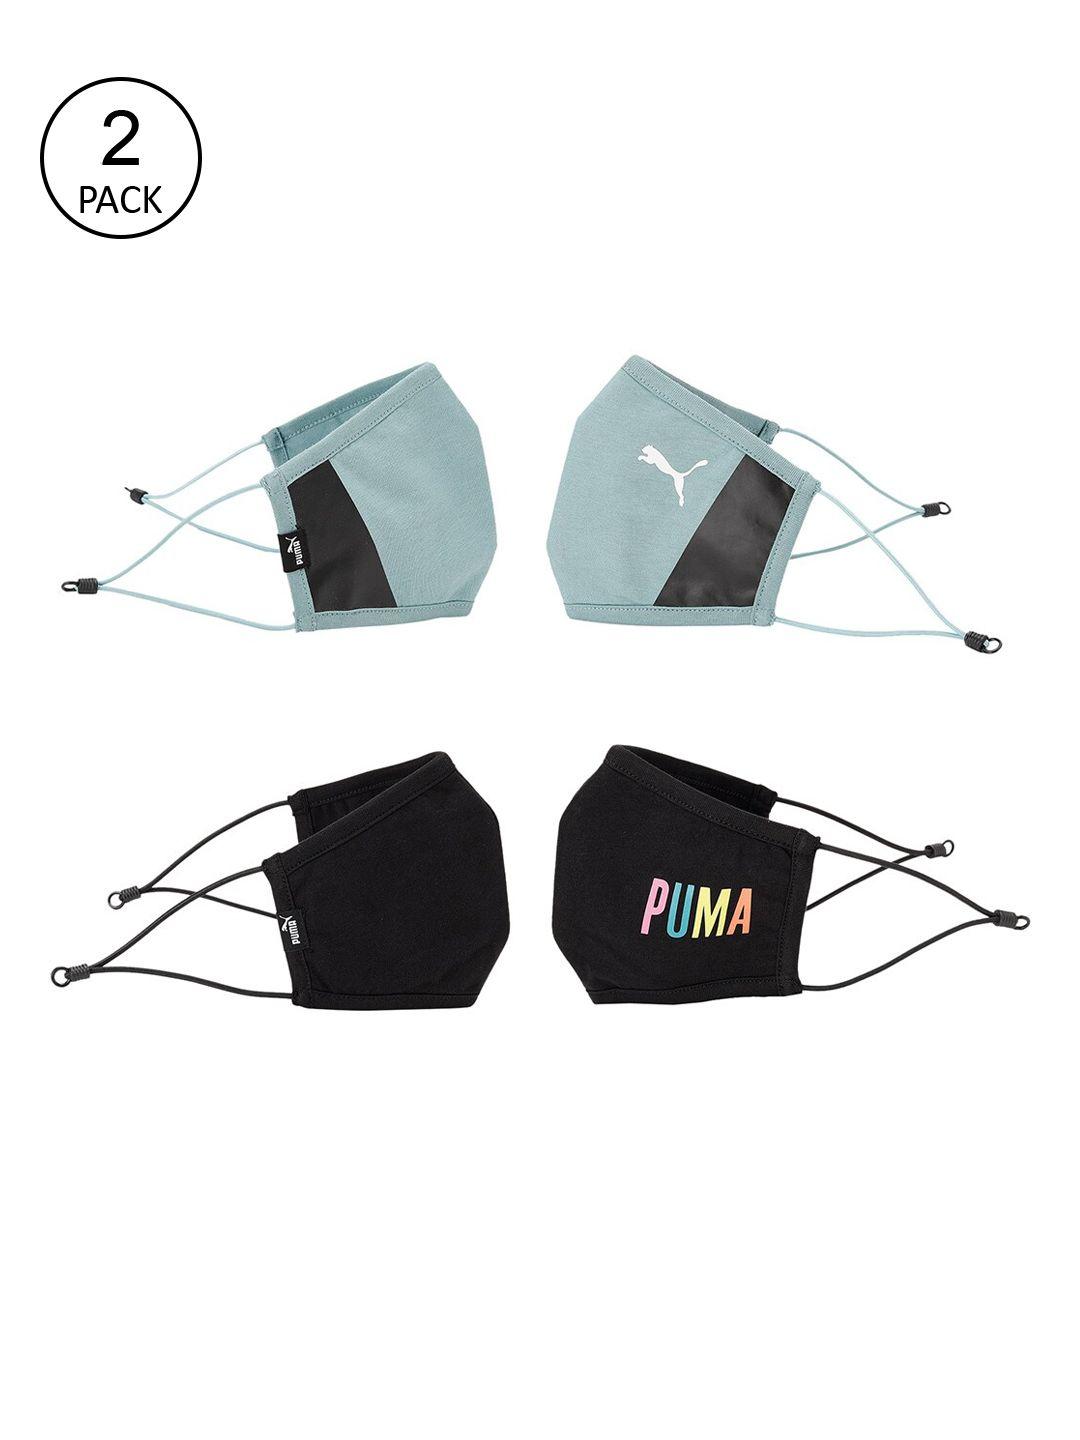 puma pack of 2 black & pastel blue reusable face mask